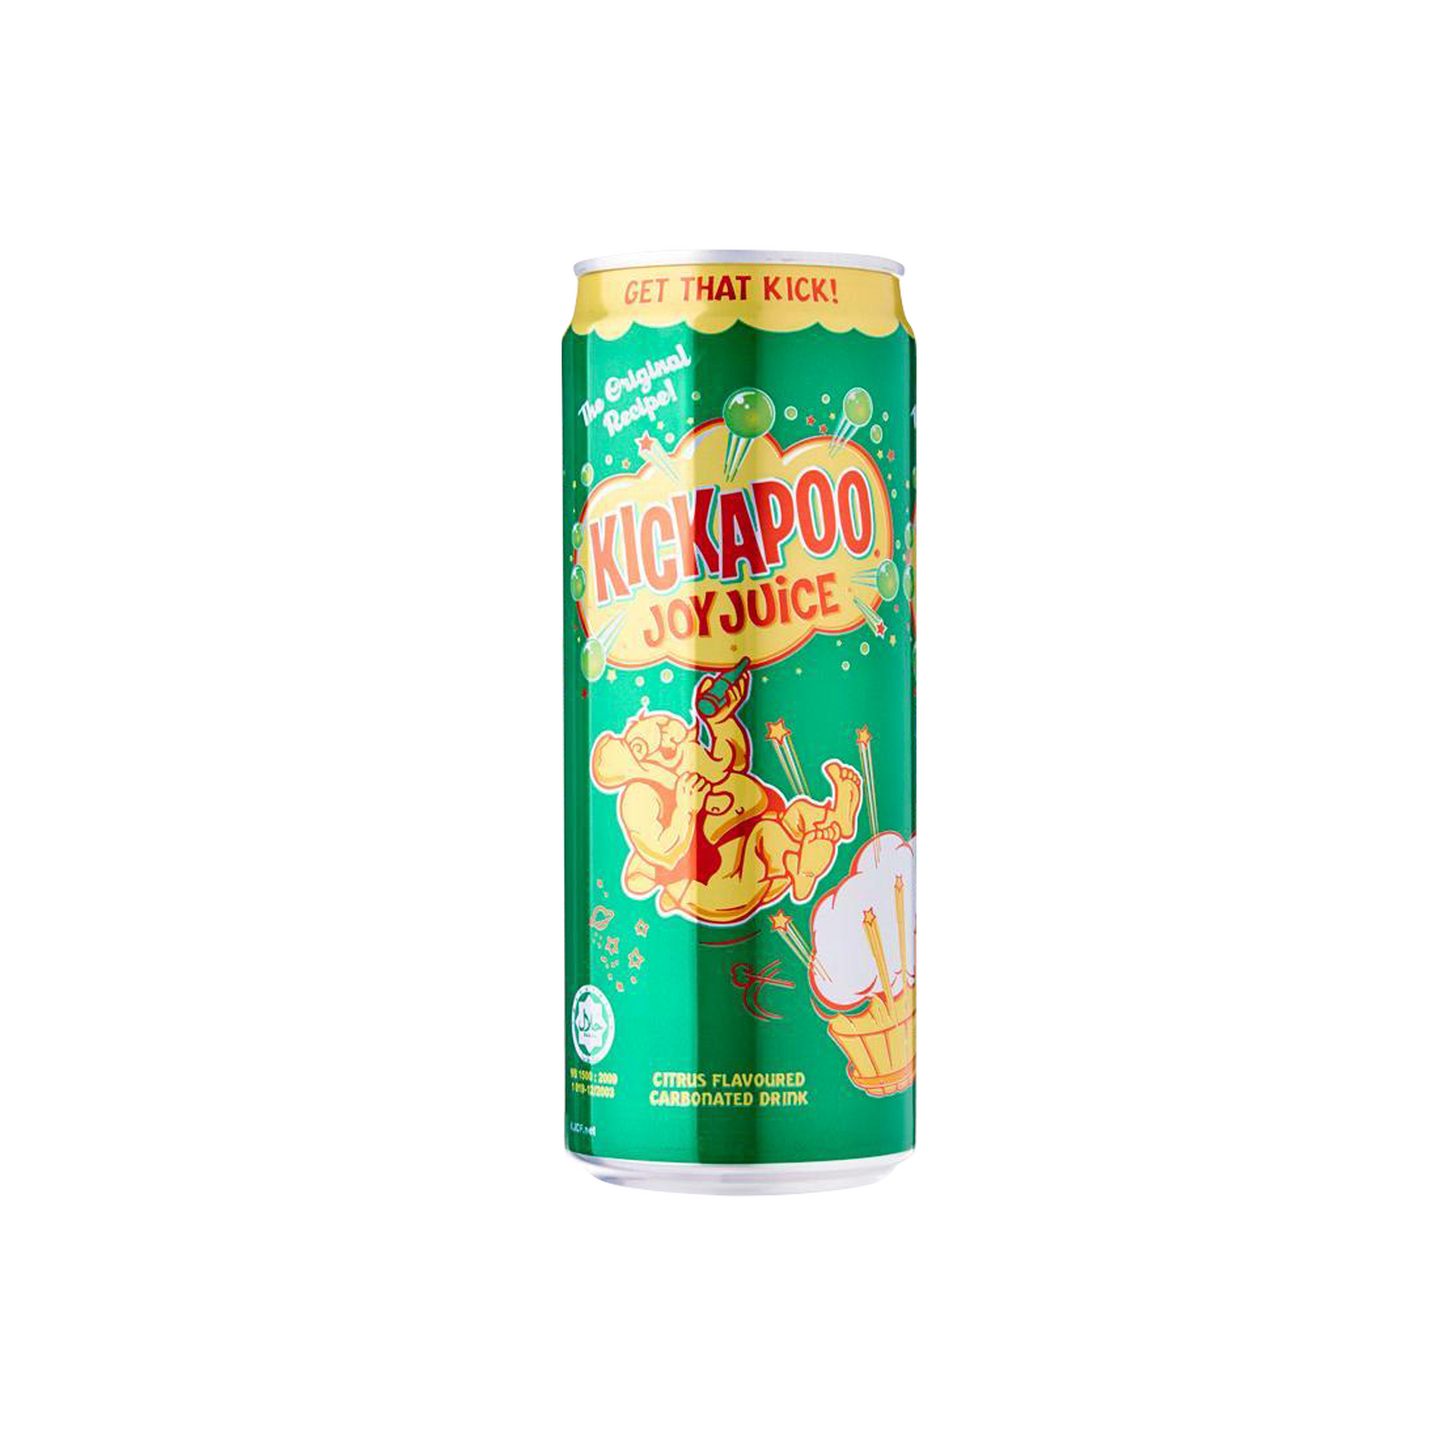 KICKAPOO CAN (325ML)